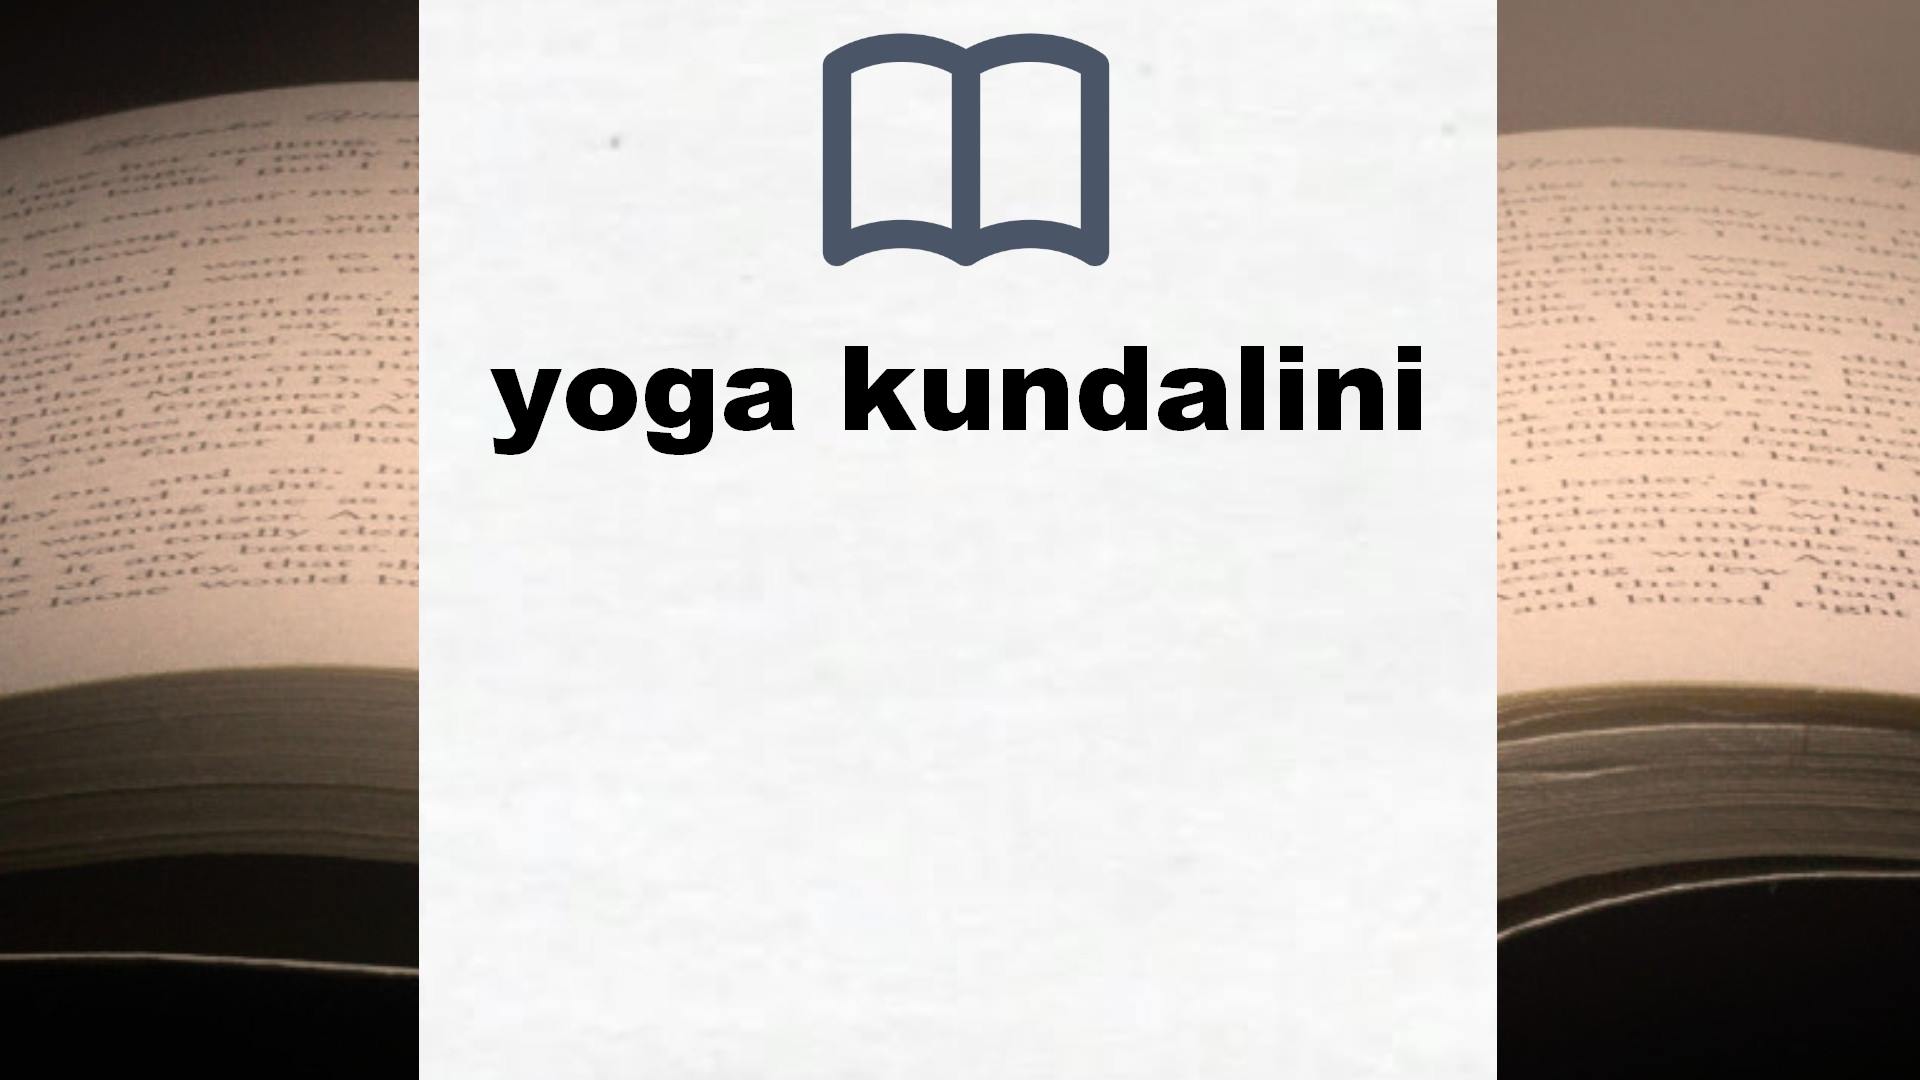 Libros sobre yoga kundalini